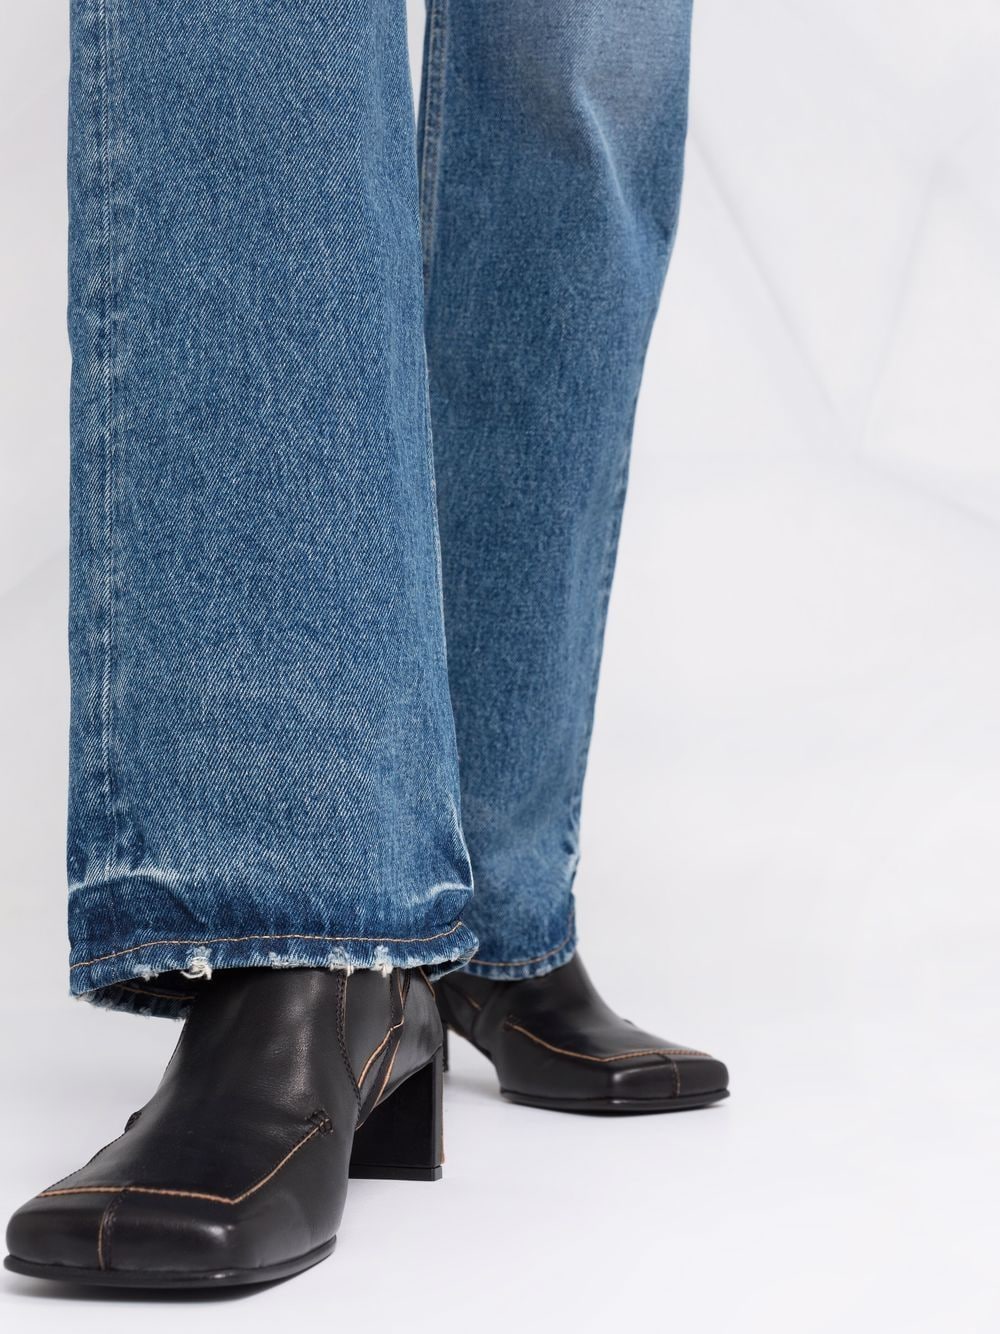 Jeans 1977 regular fit in cotone organico blu sbiadito